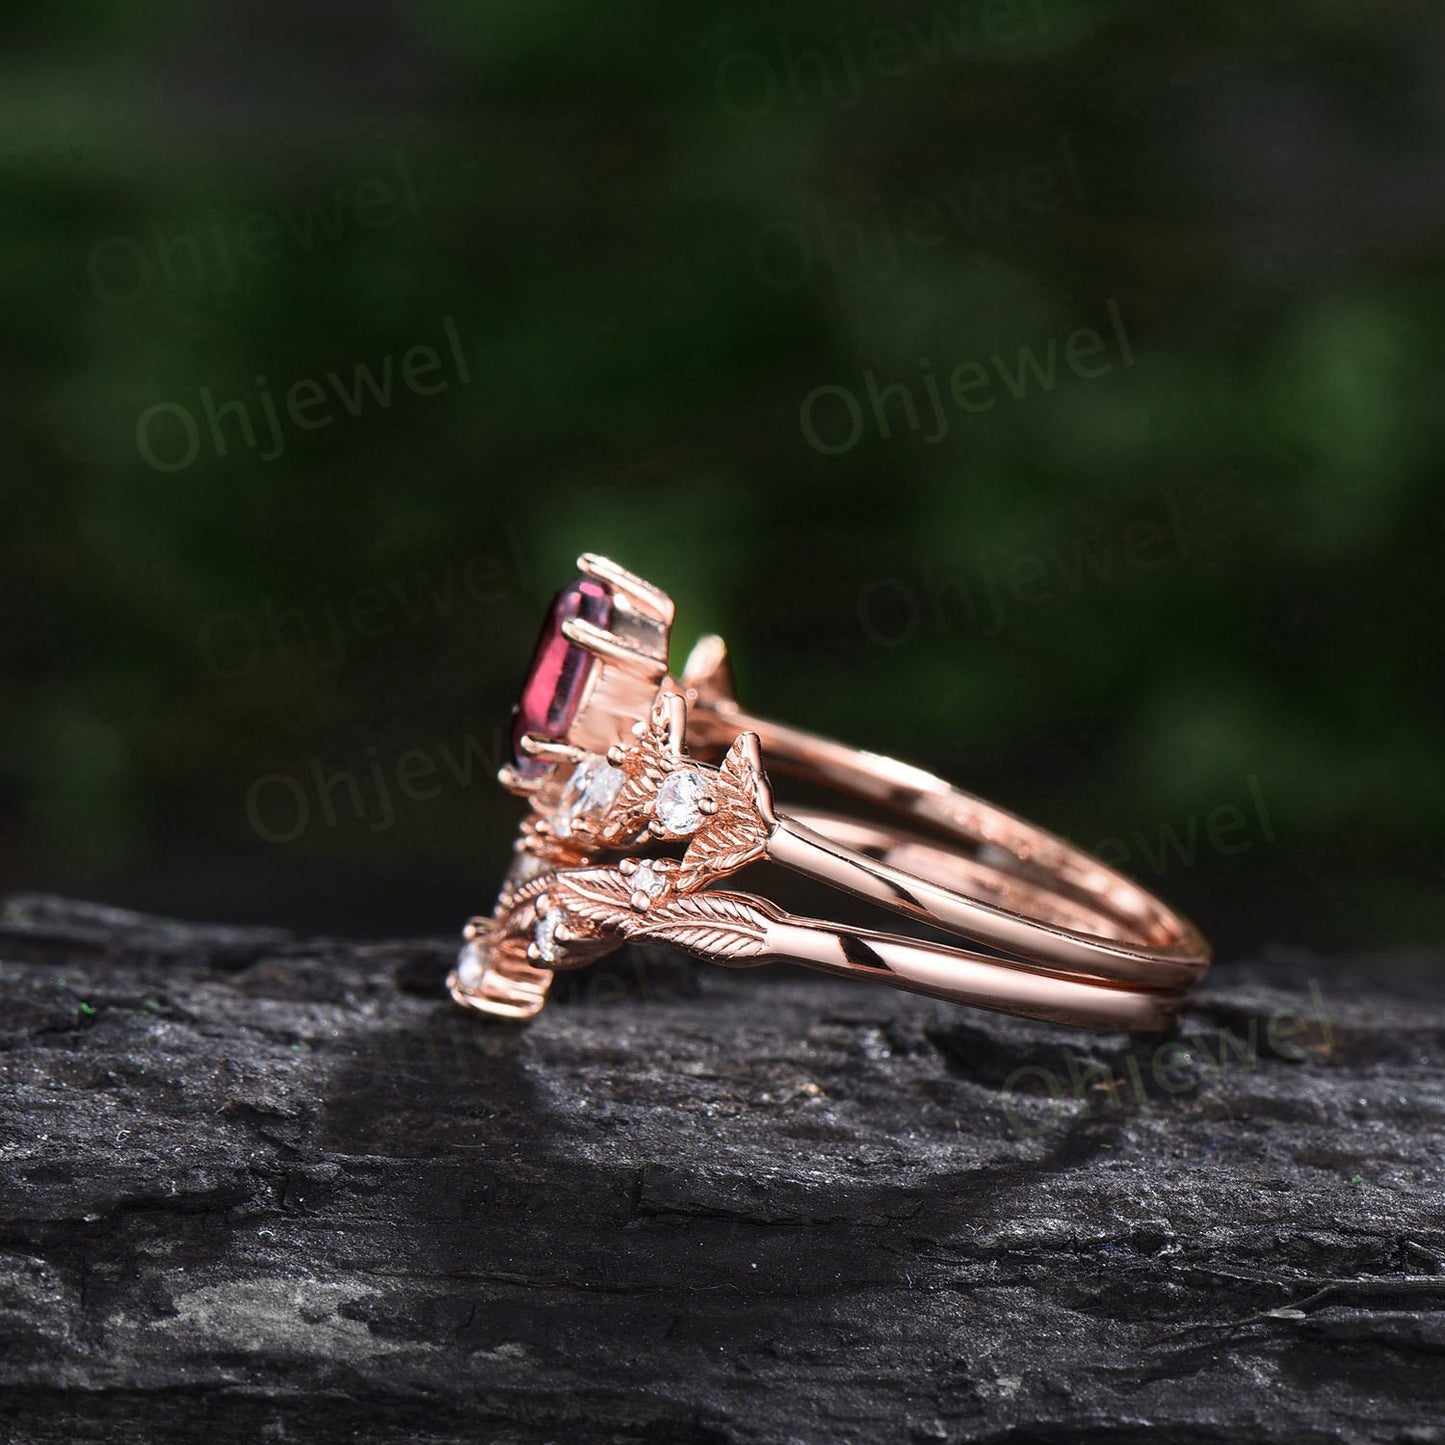 Twig oval cut Pink Tourmaline engagement ring set 14k rose gold branch leaf diamond ring art deco unique promise wedding ring set for women